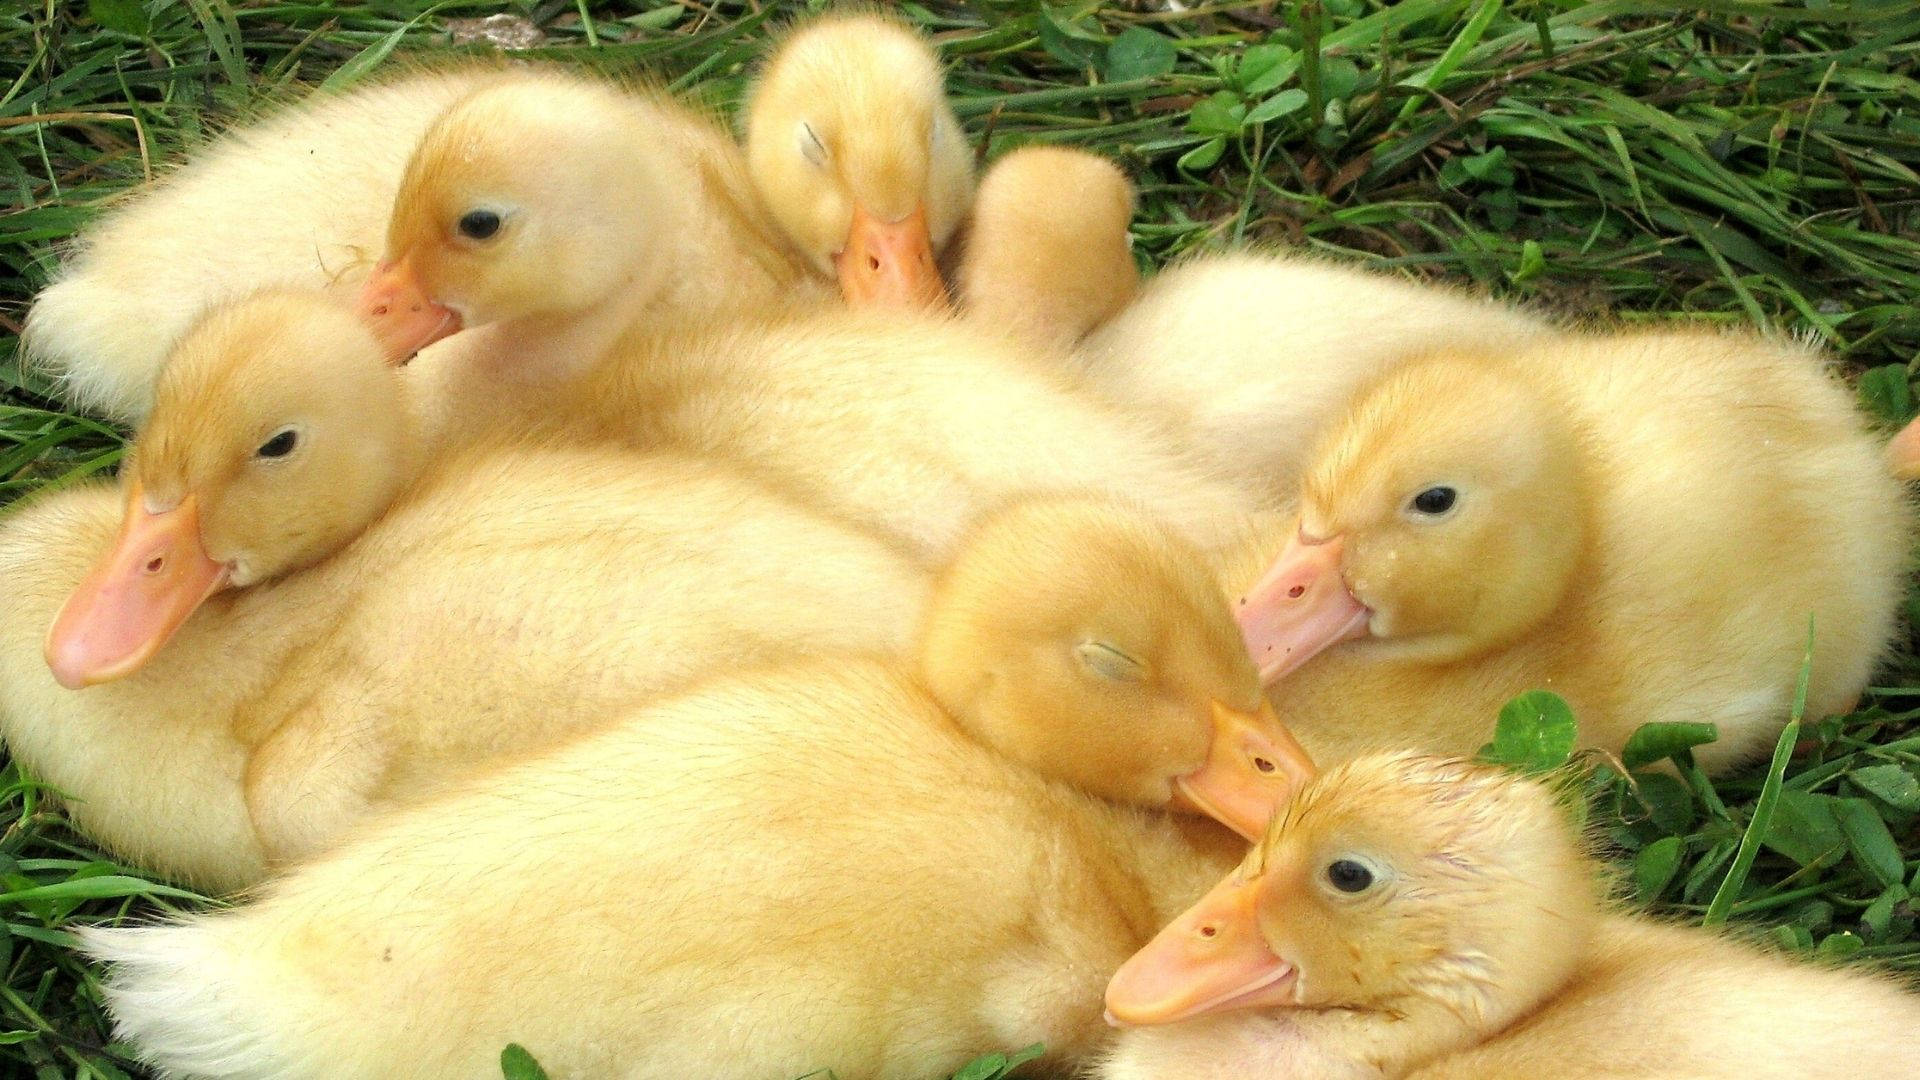 Baby Ducks Sleeping Together